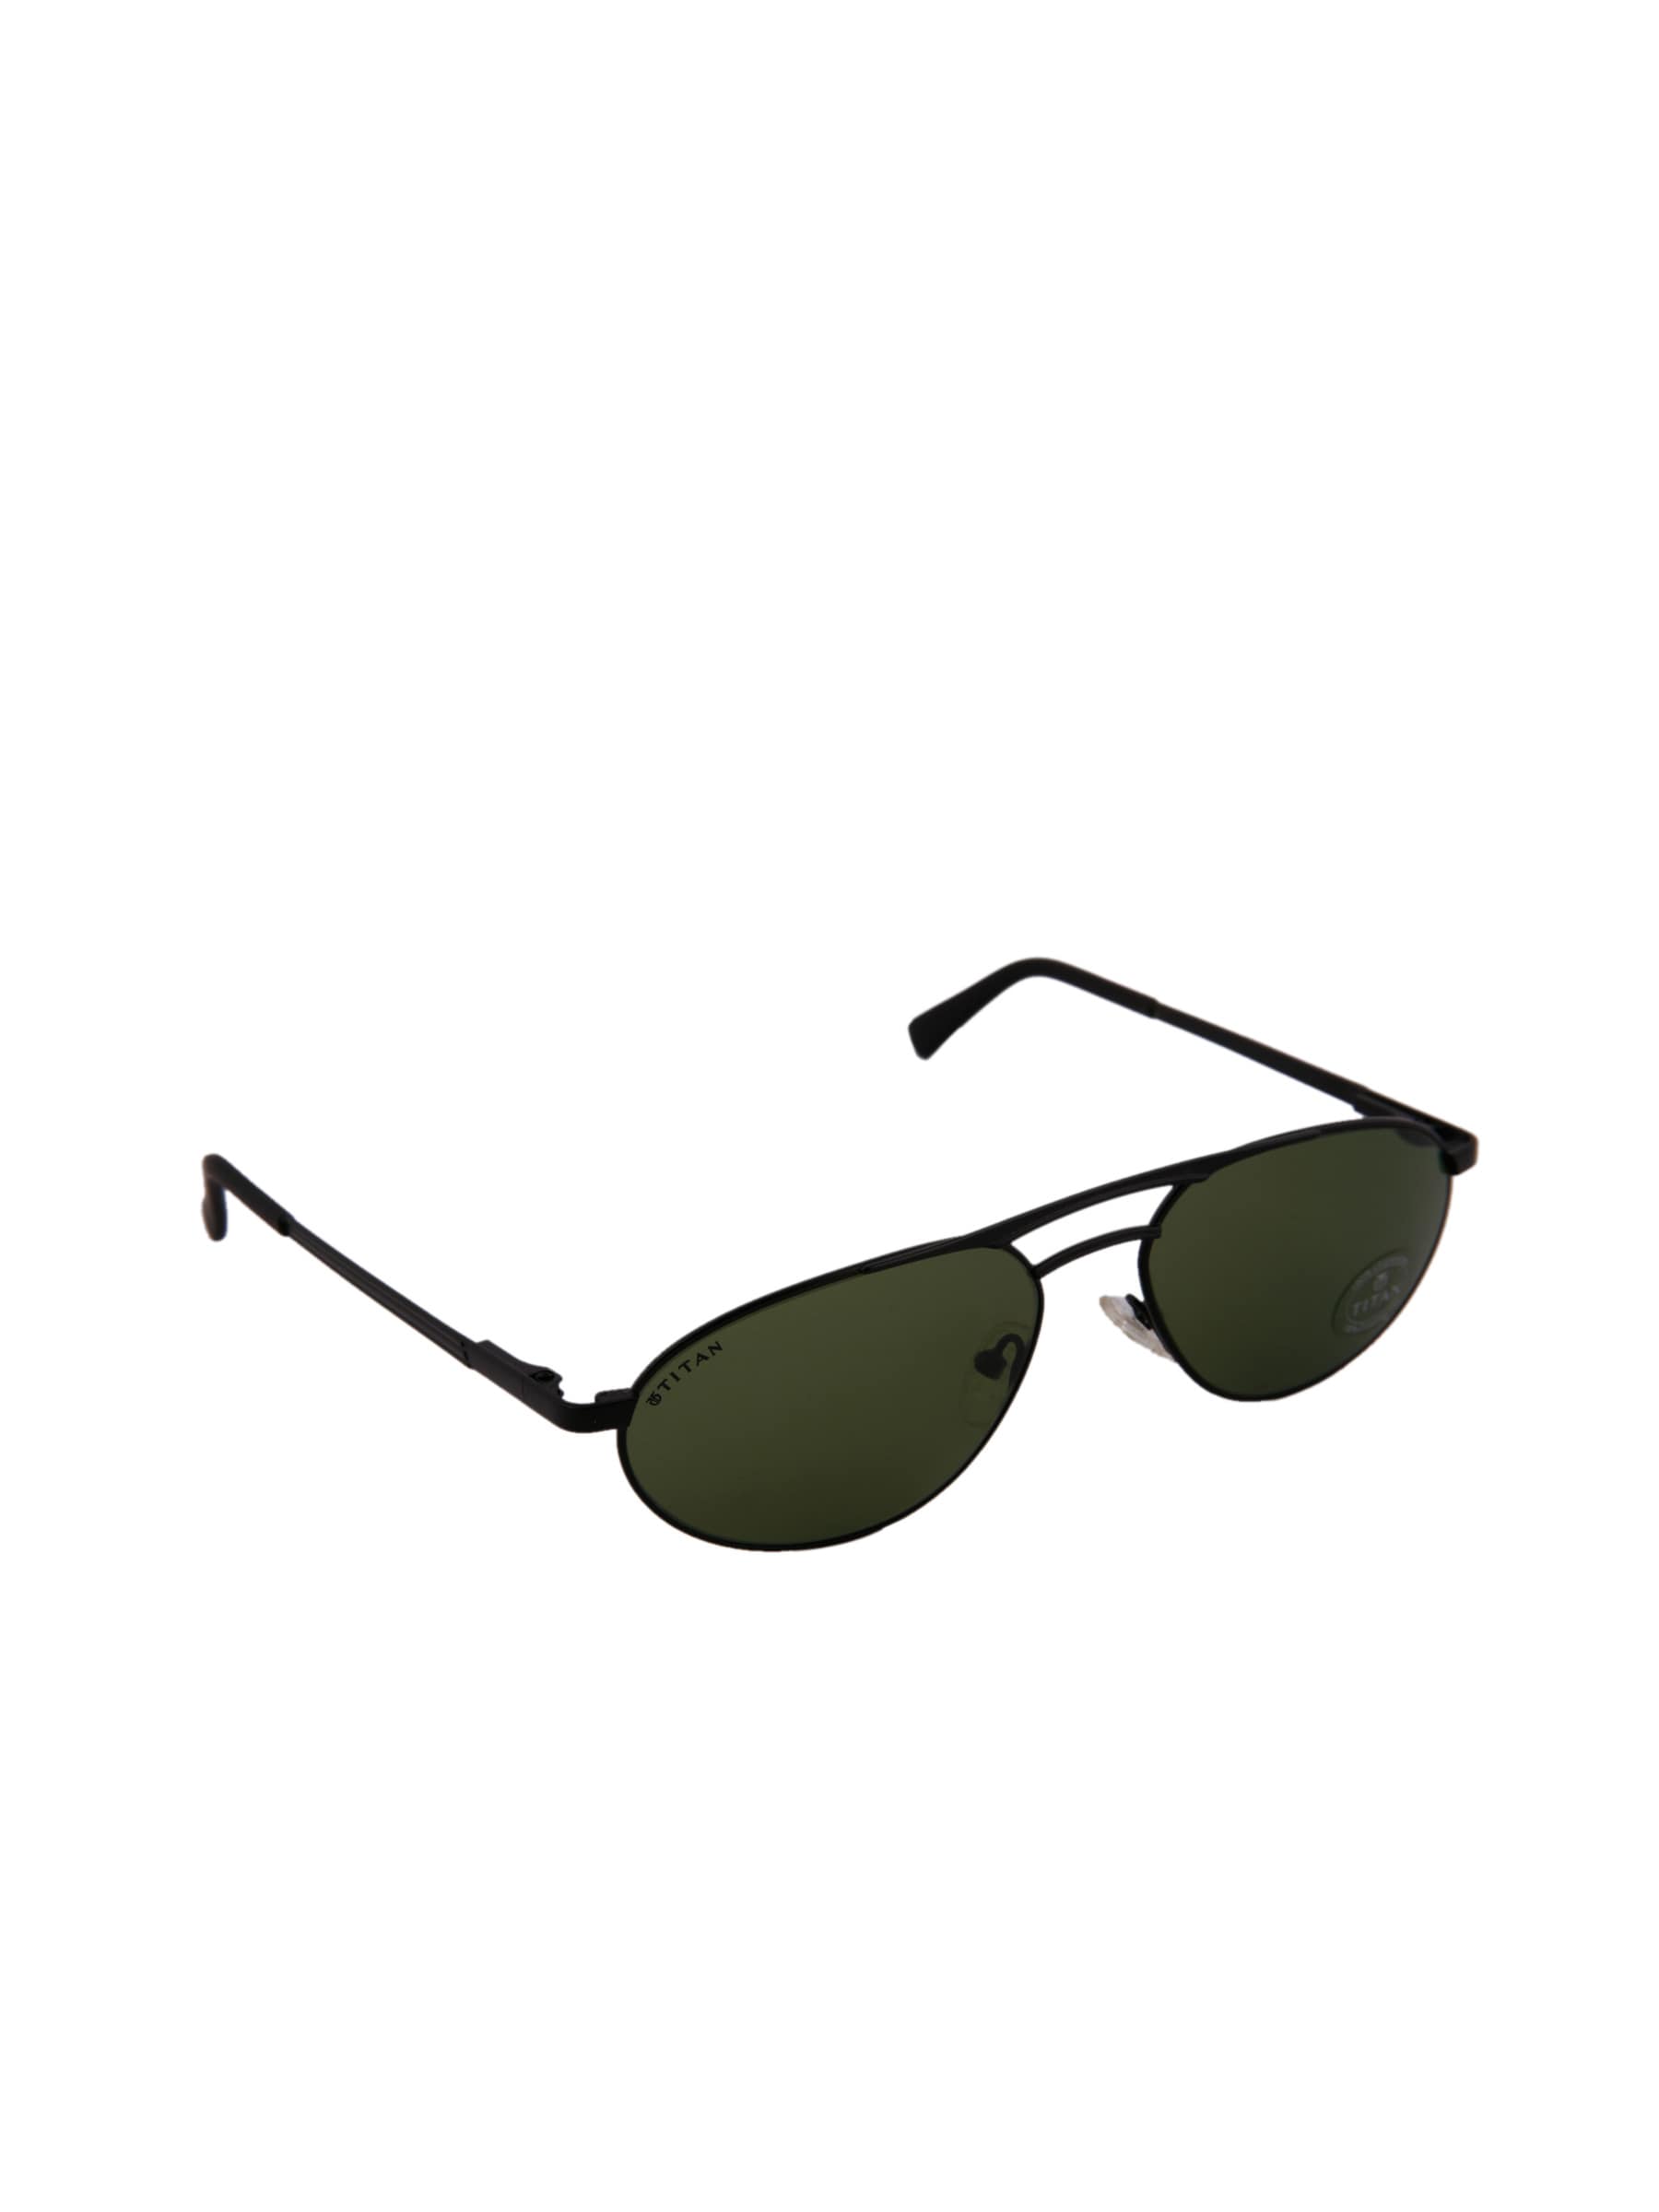 Fastrack Unisex Green Sunglasses